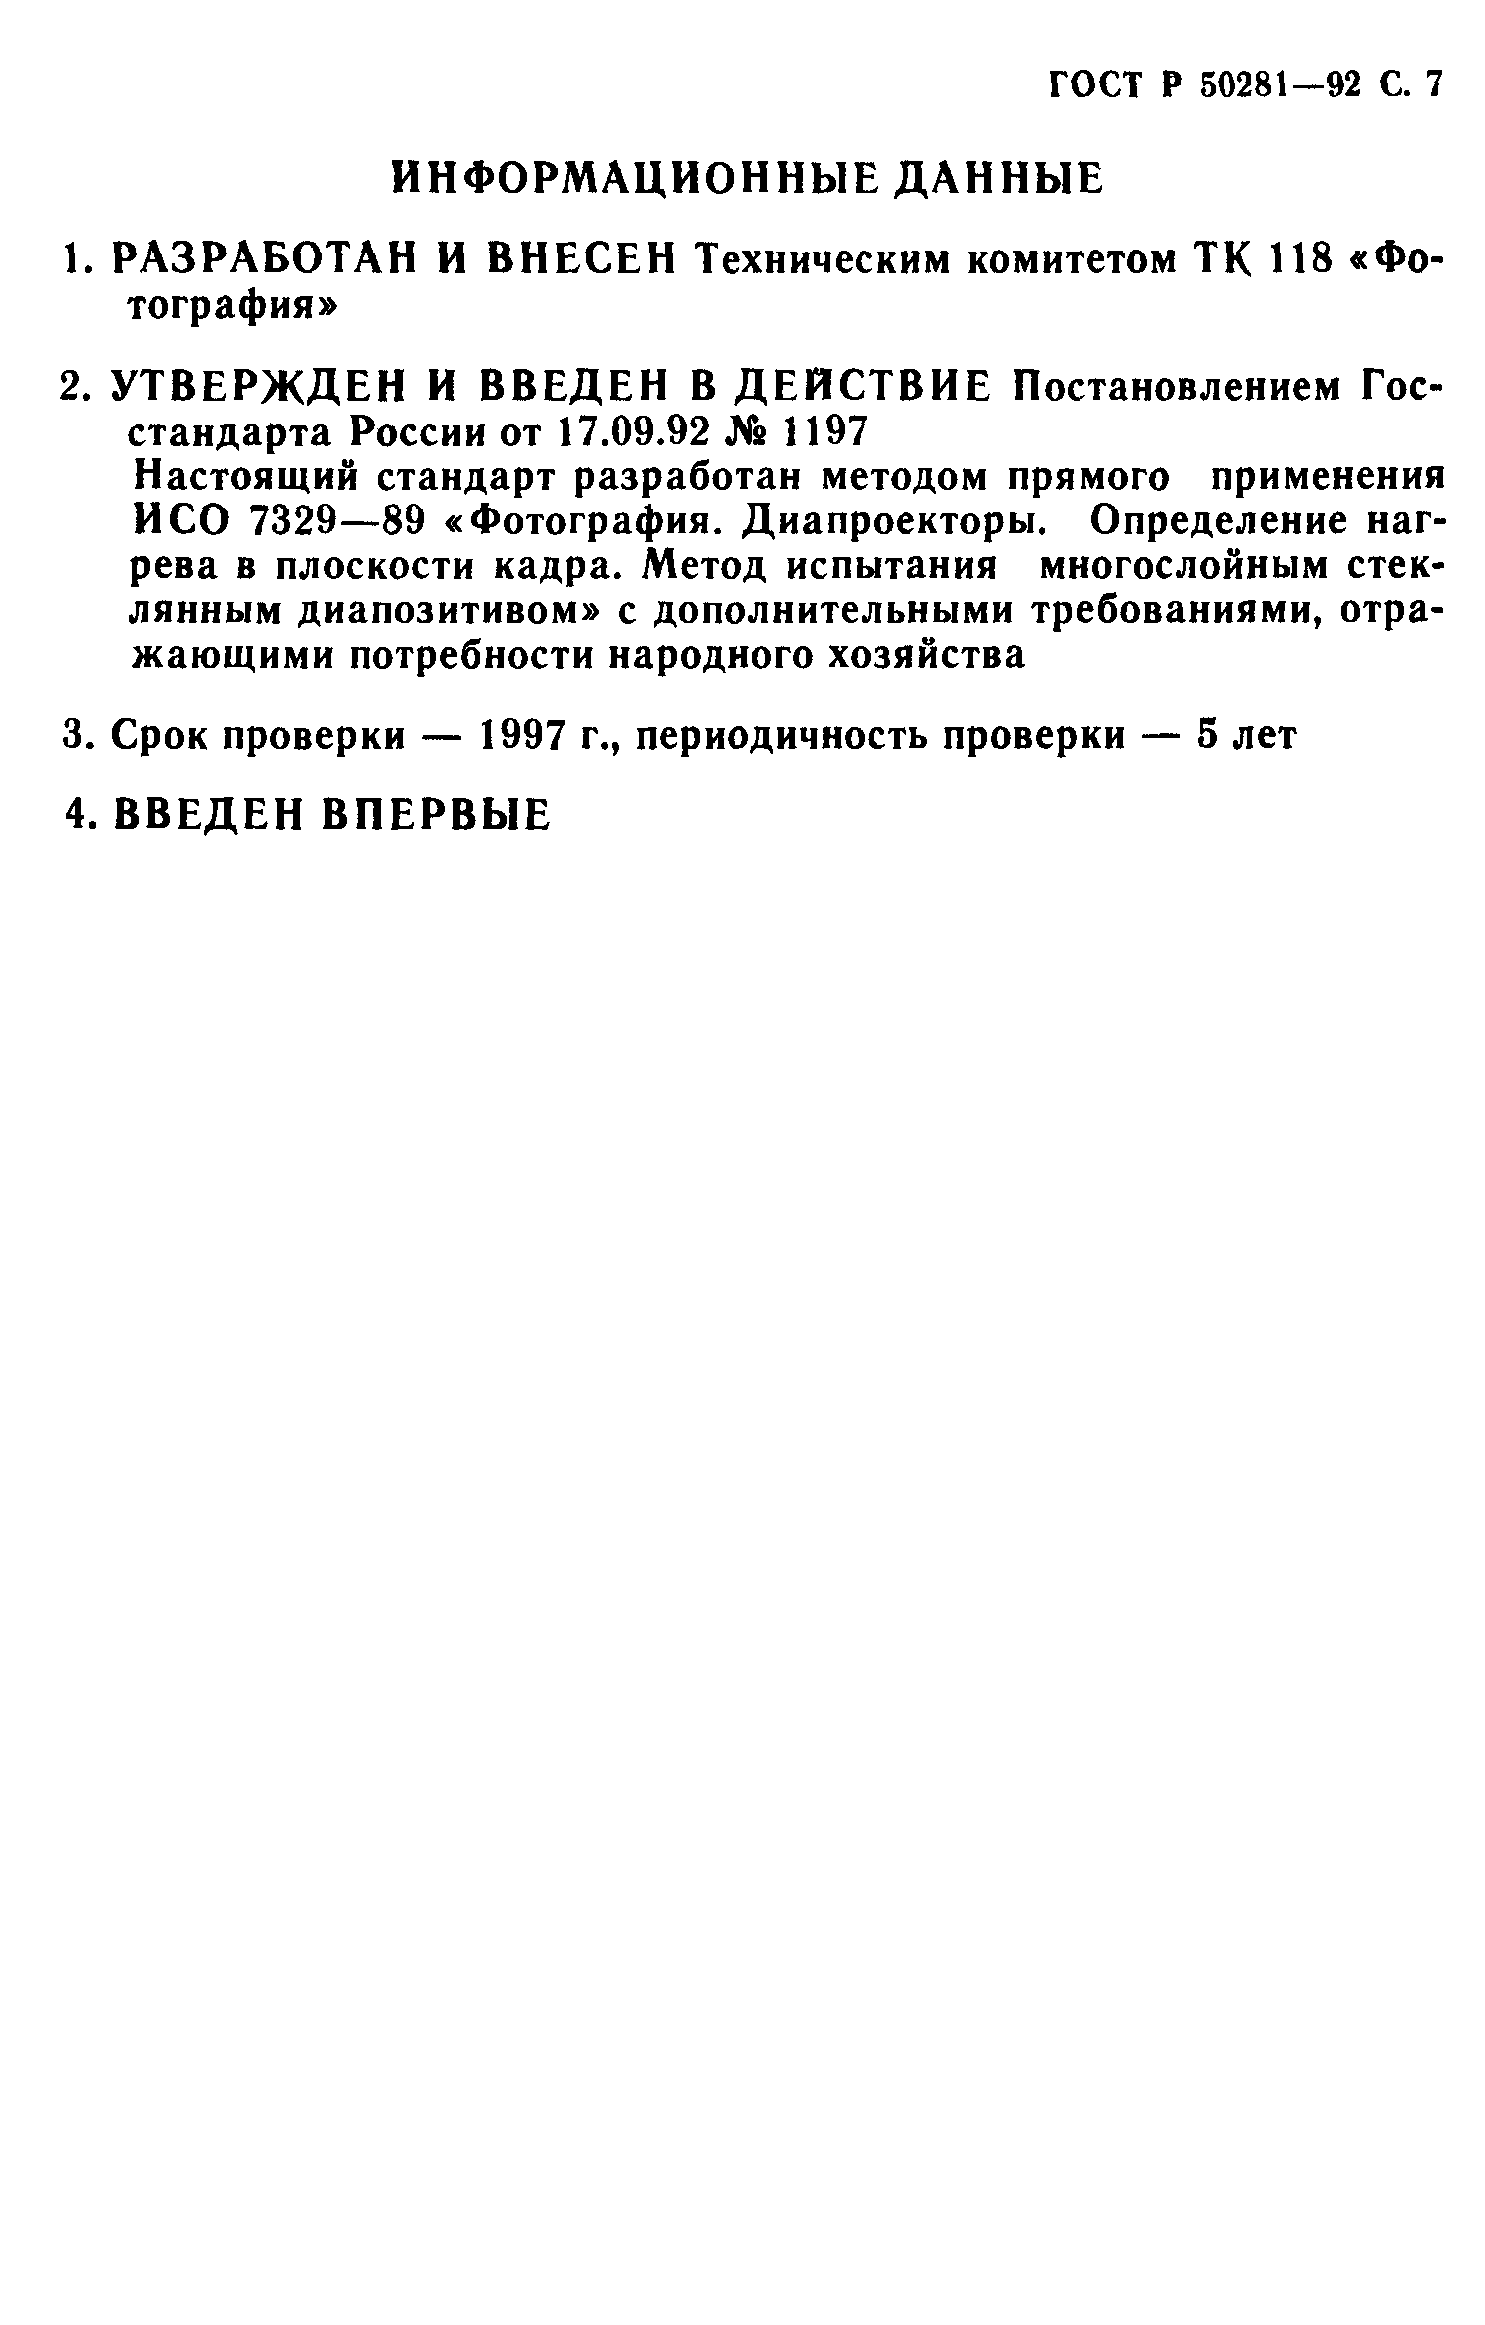 ГОСТ Р 50281-92